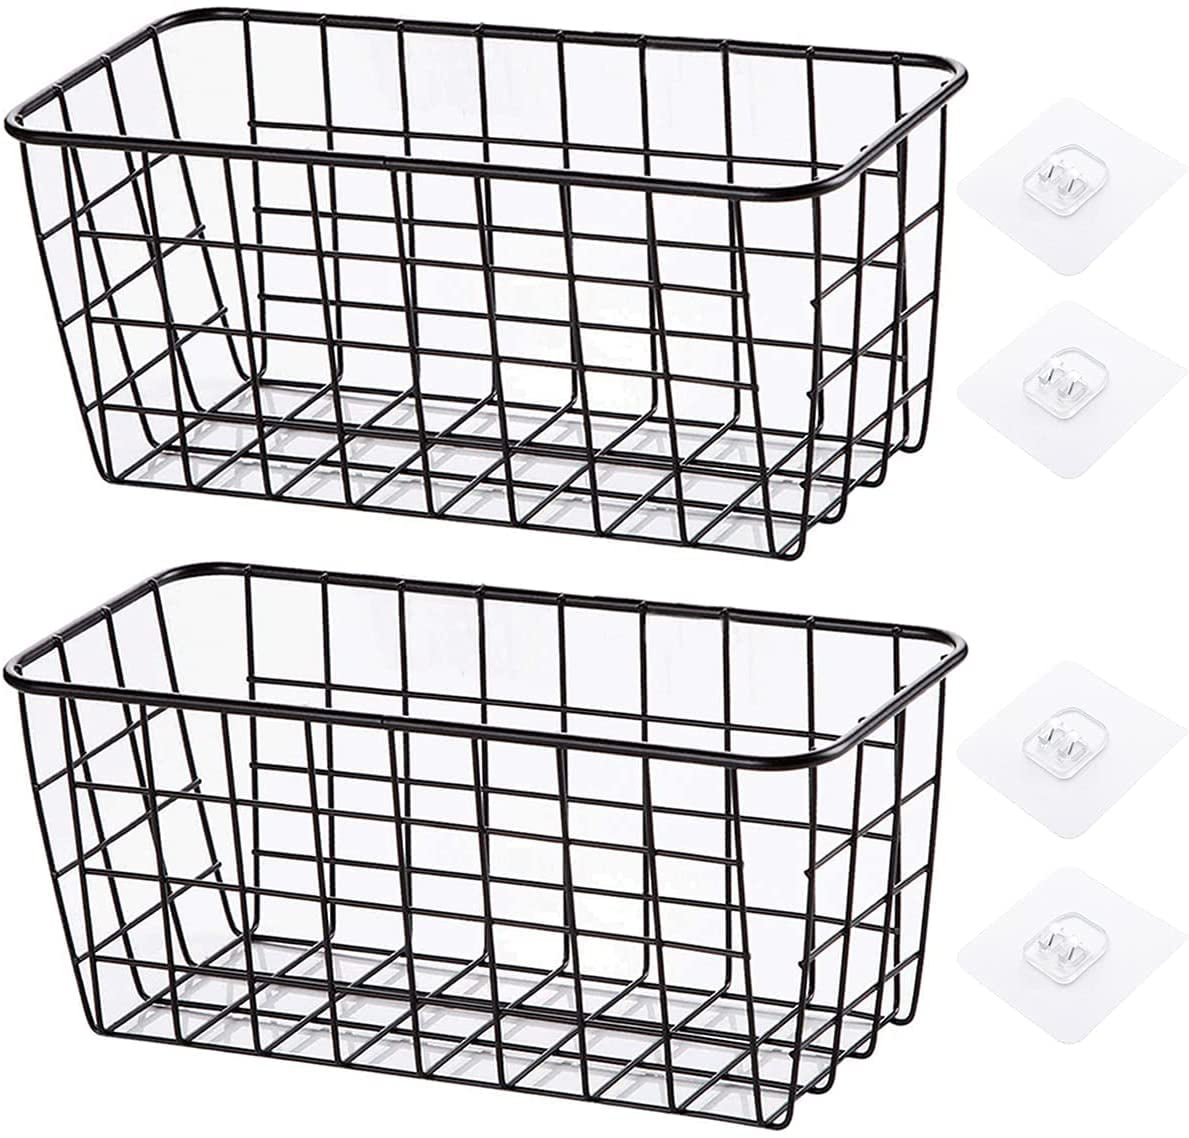 Fashion Wall Mountable Wire Storage Basket Rack Decor for Grid Panel Display 